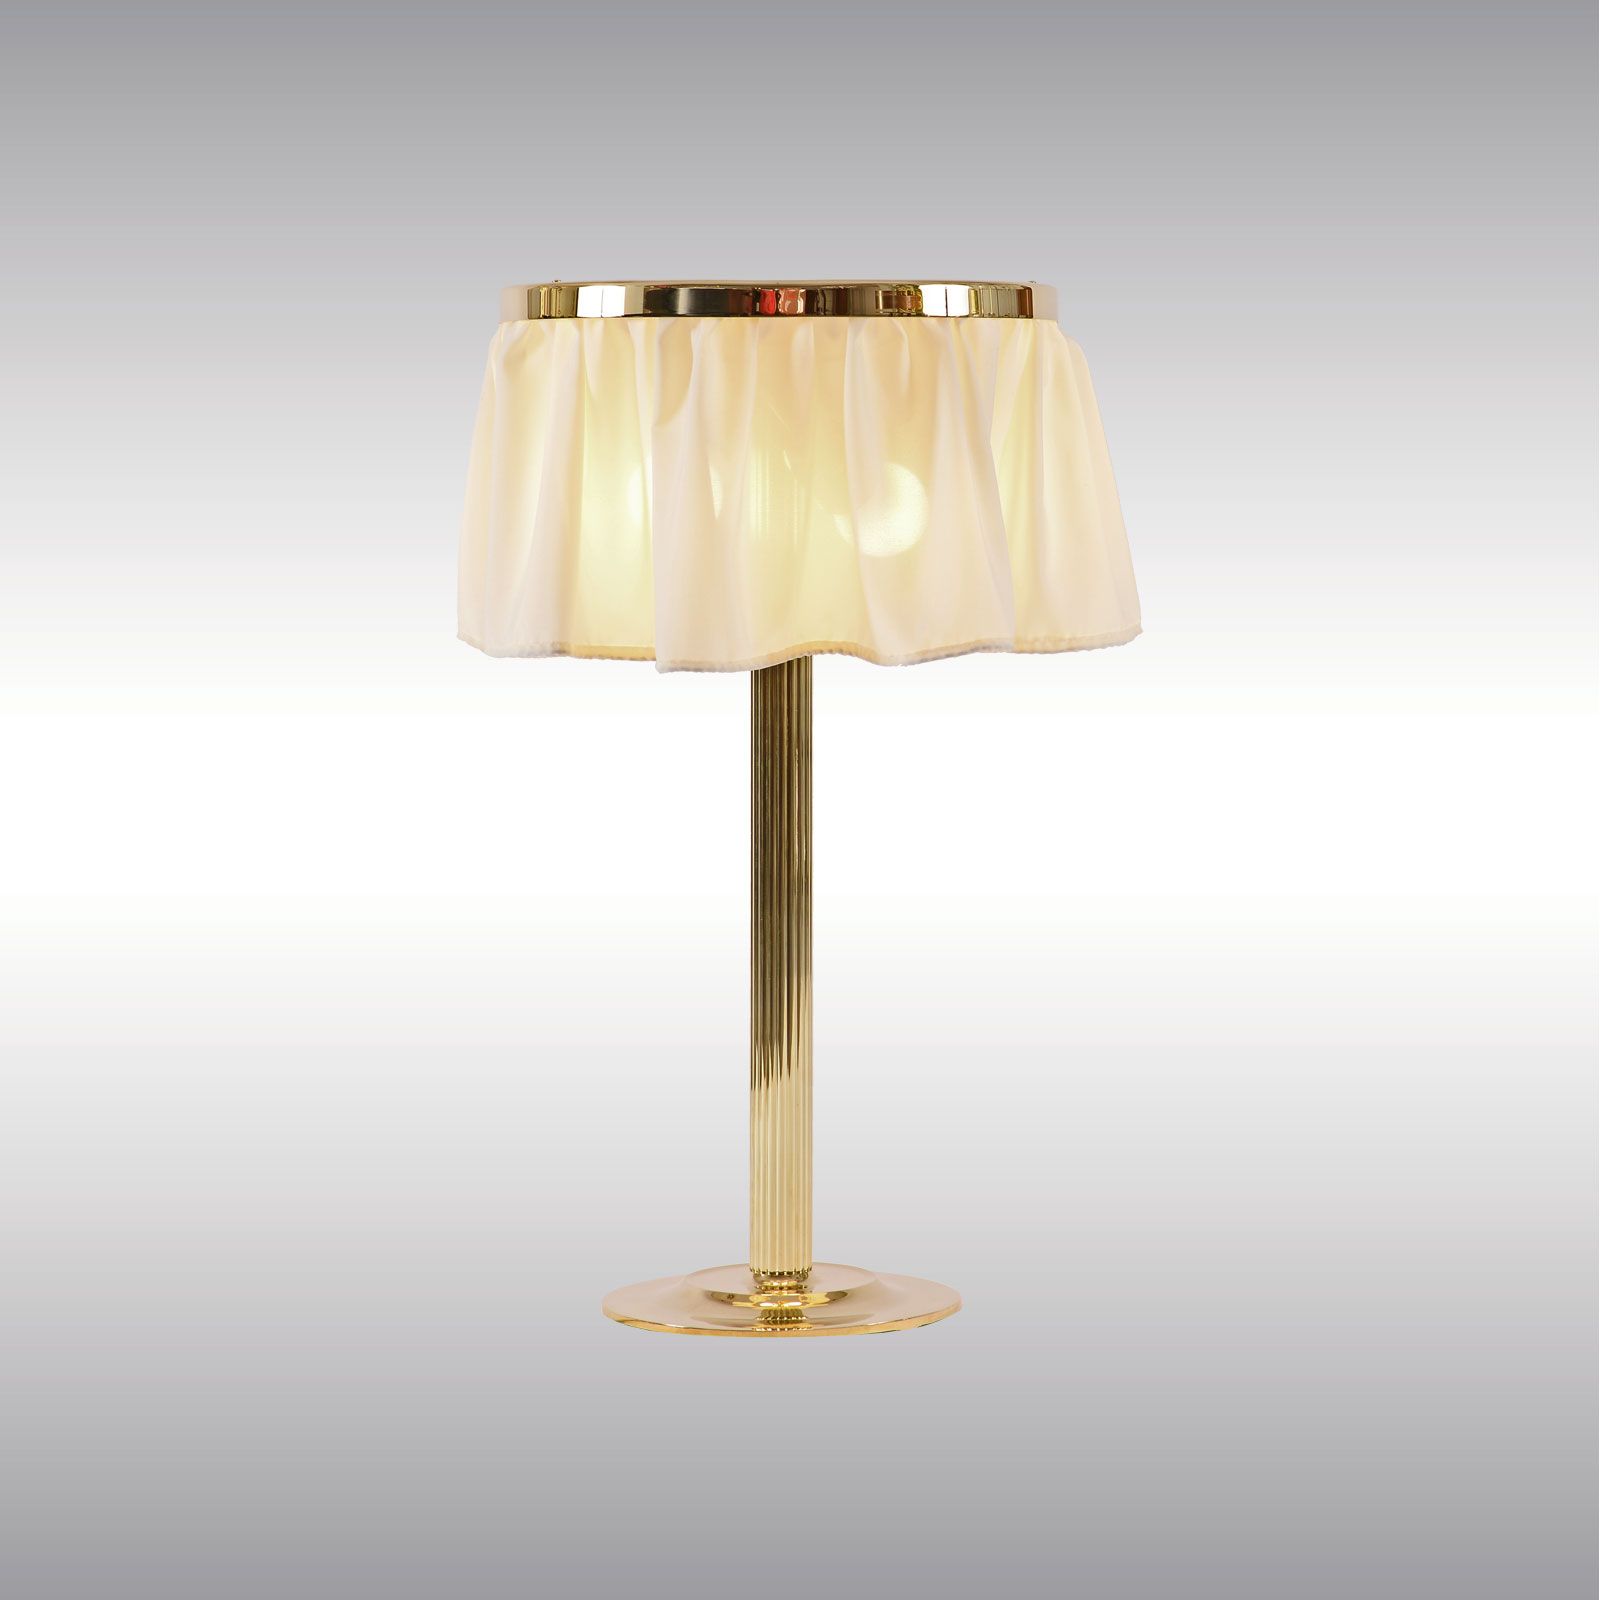 WOKA LAMPS VIENNA - OrderNr.: 69|FL2 - Design: Adolf Loos